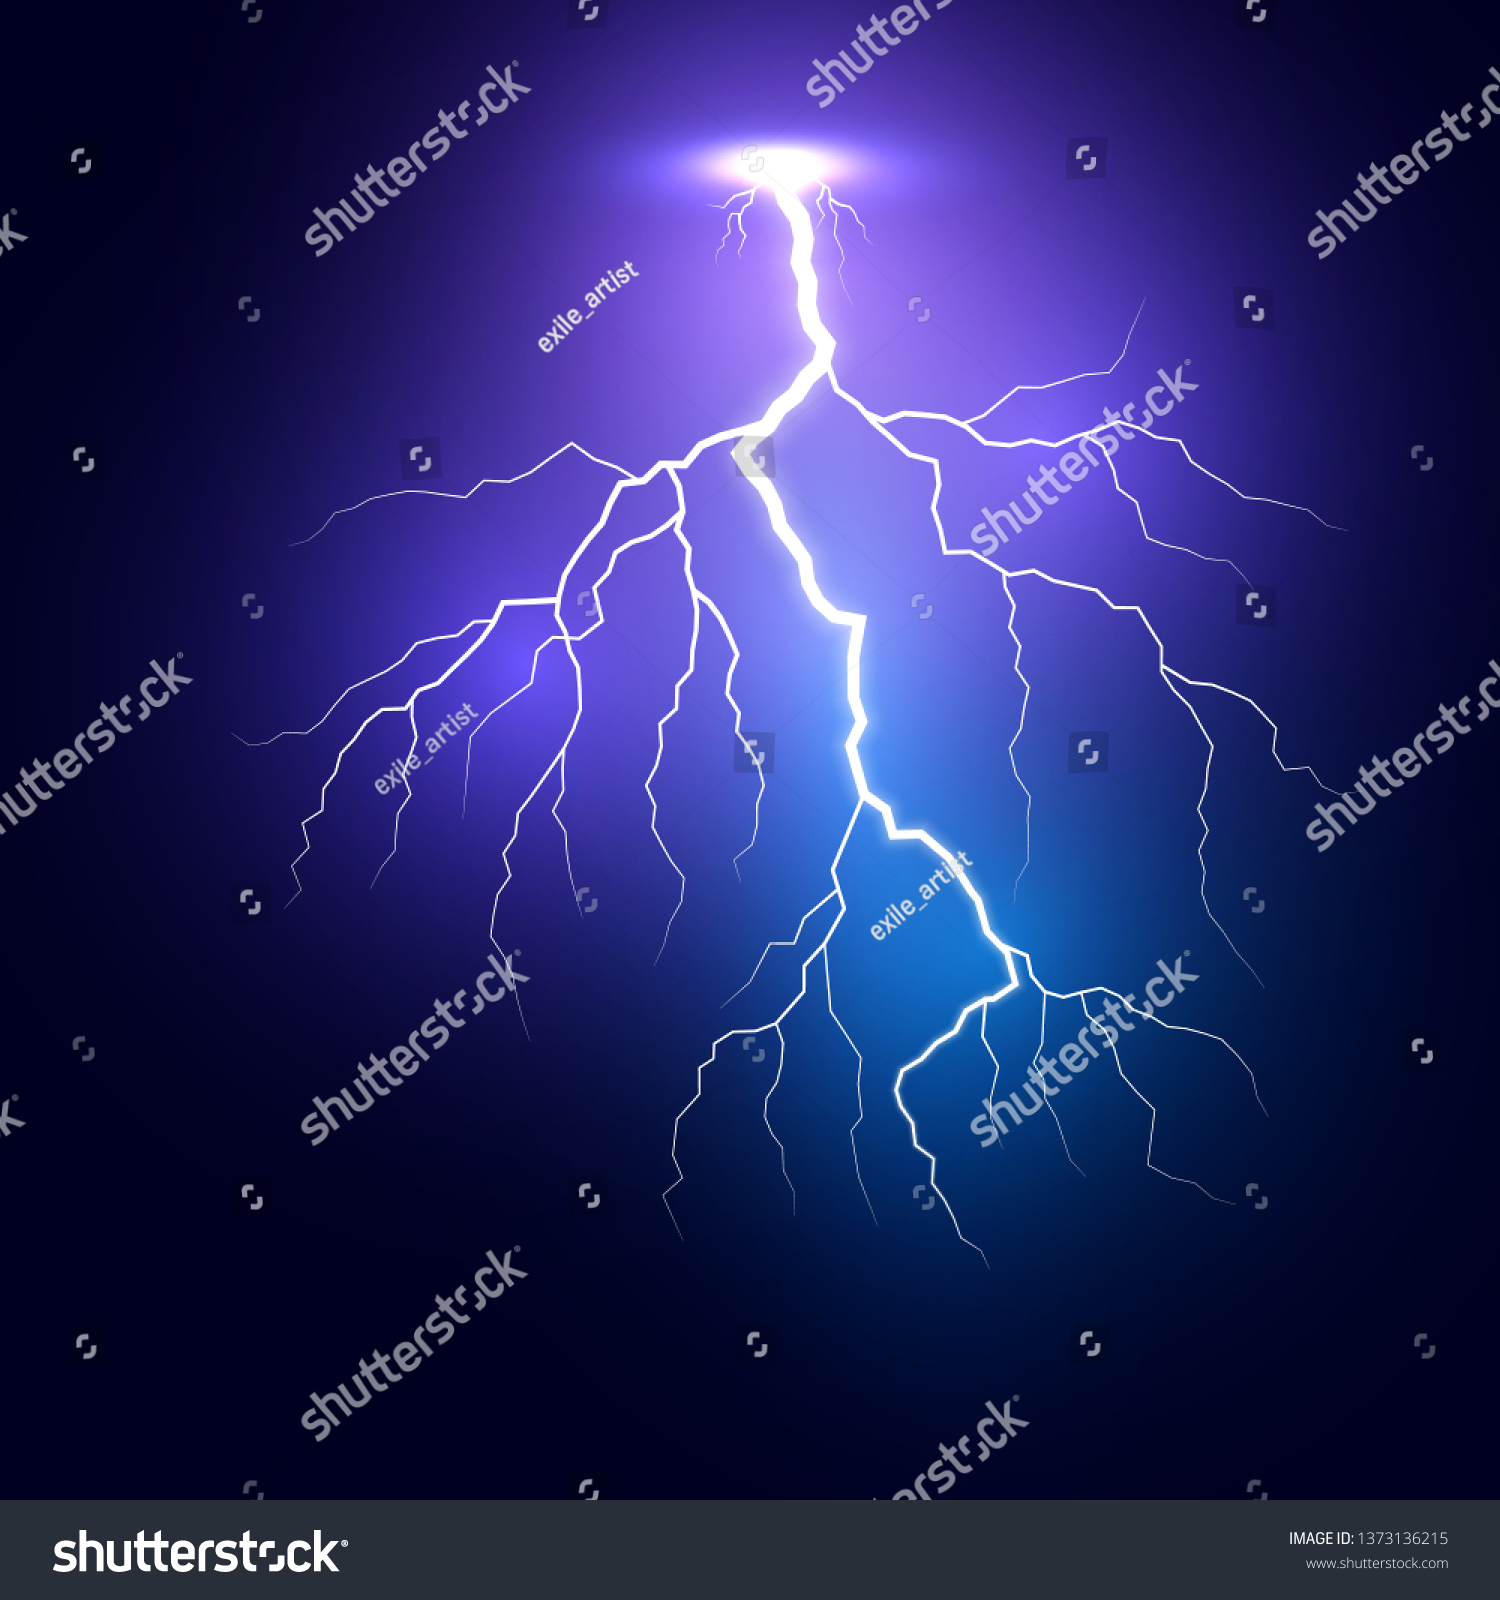 Thunder Storm